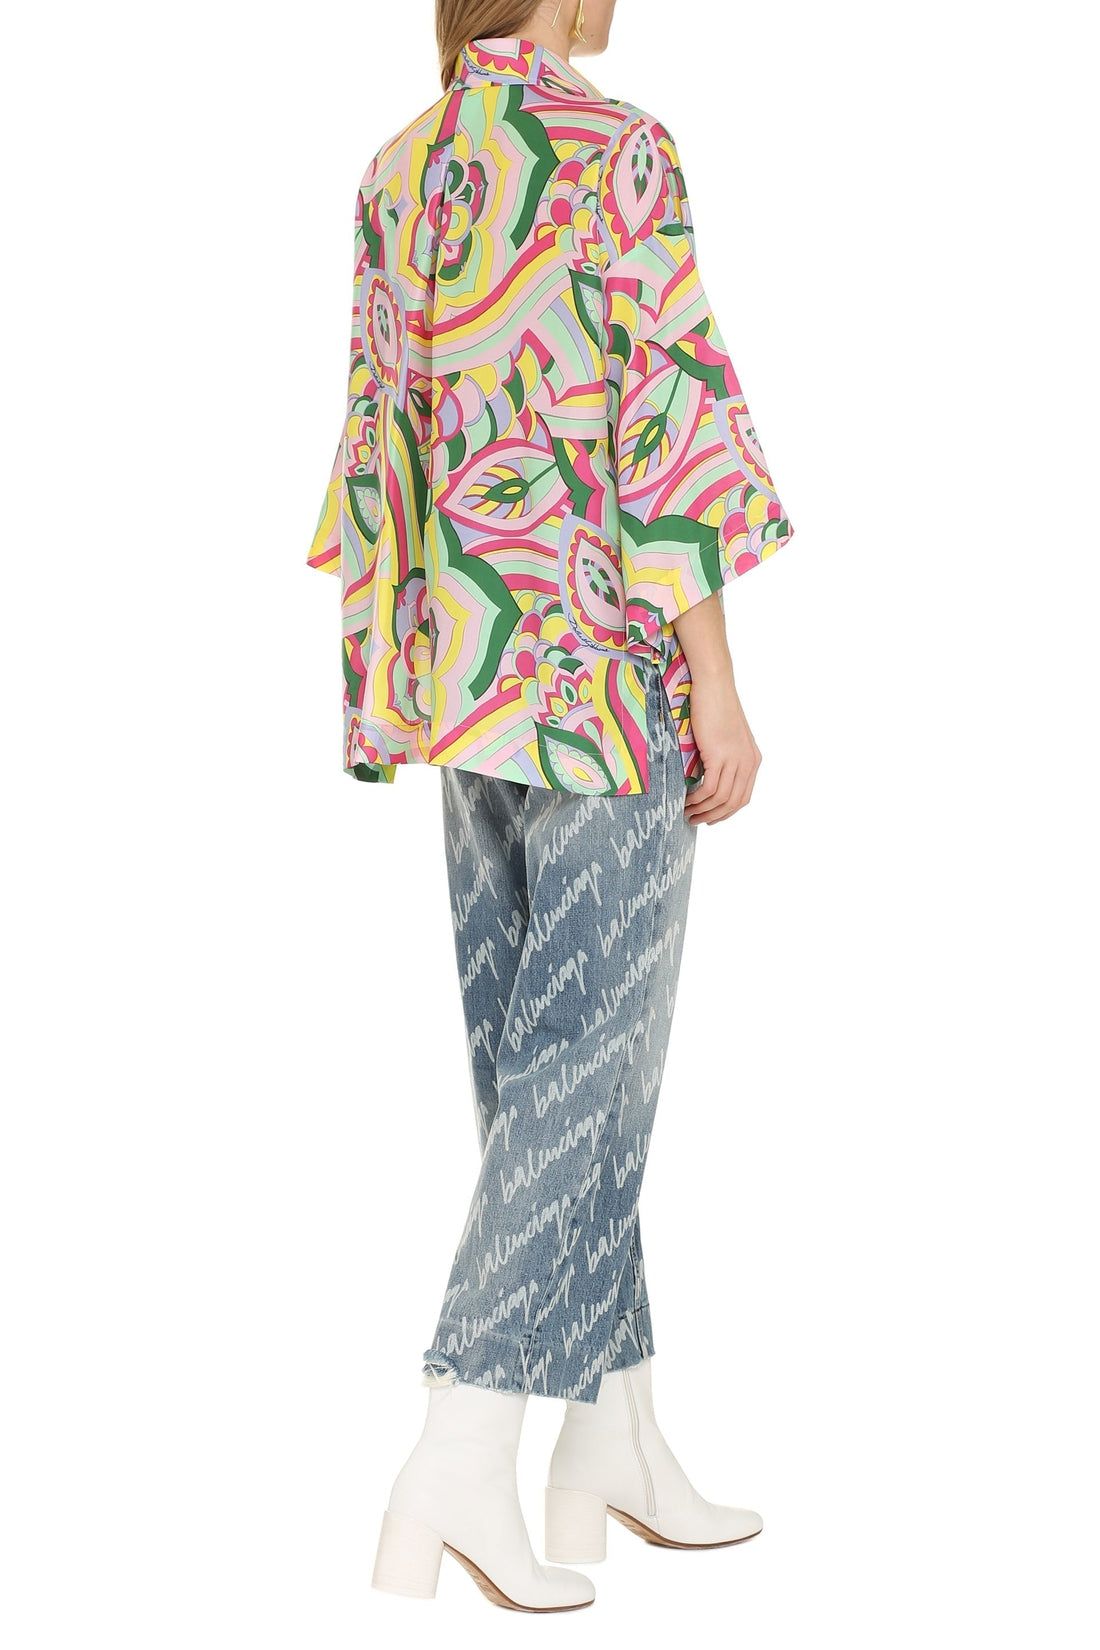 Dolce & Gabbana-OUTLET-SALE-Printed silk shirt-ARCHIVIST